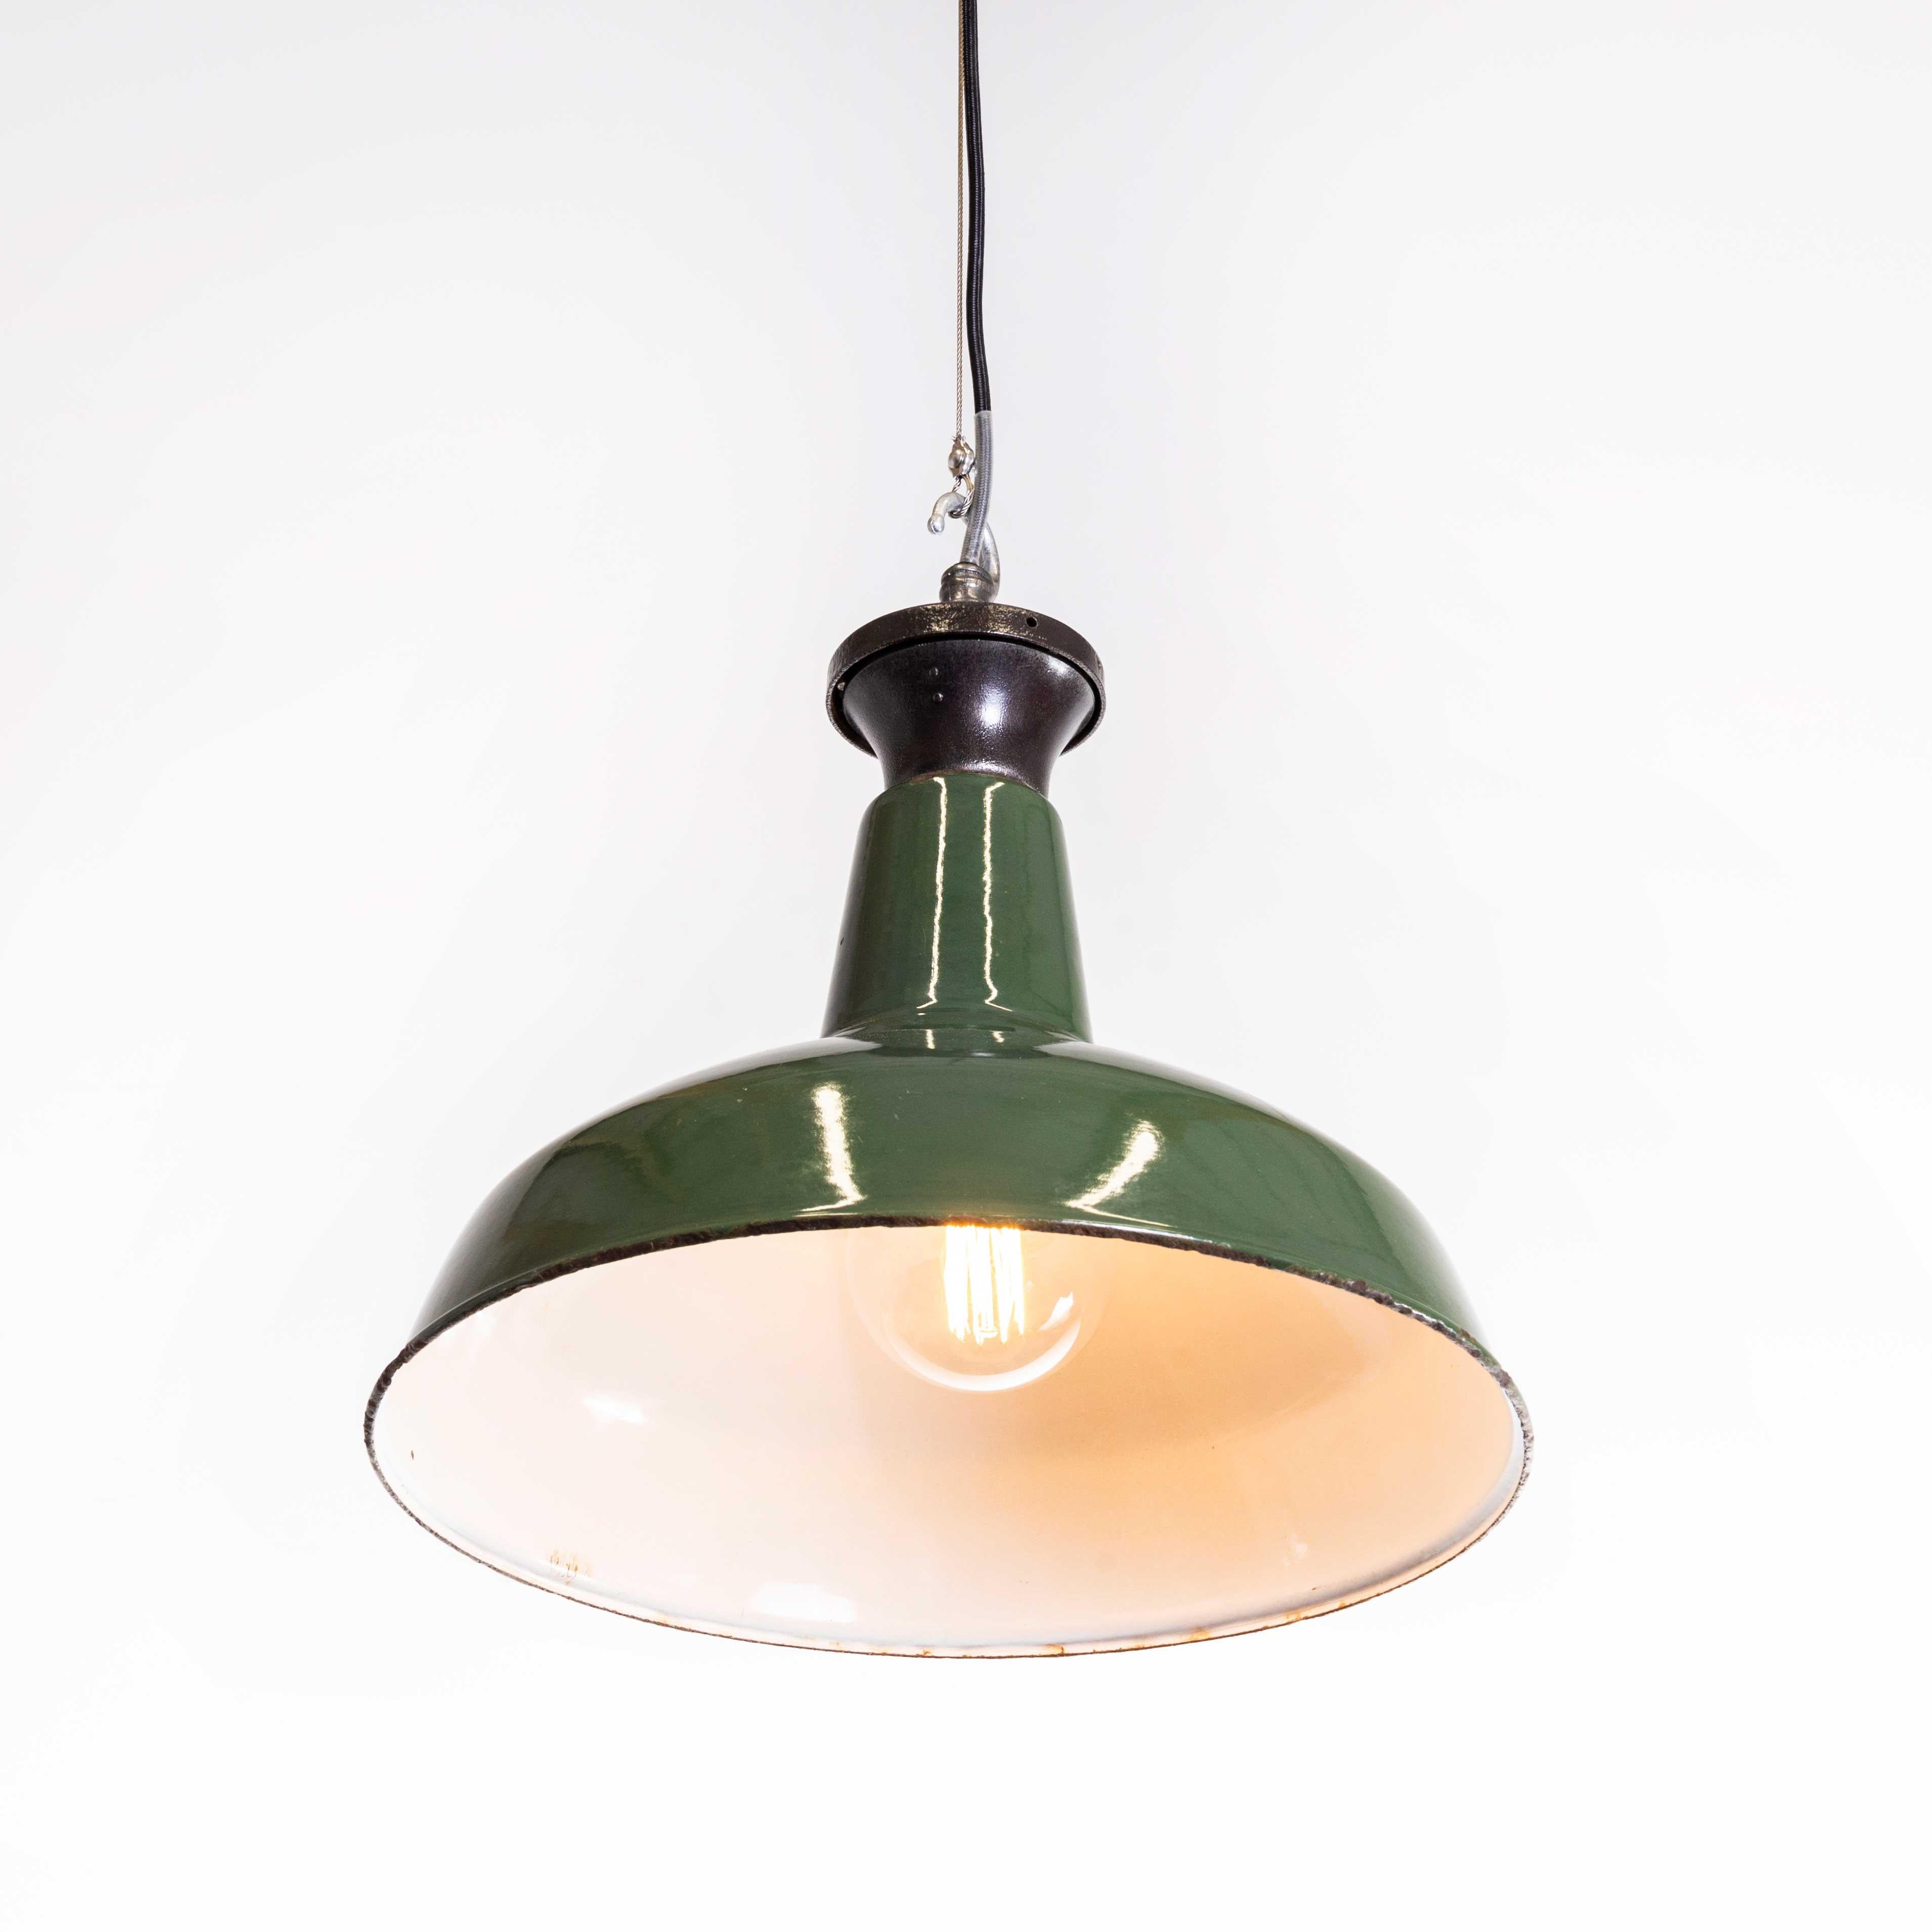 1940's Real Industrial Enamel Green Single Pendant Lamp - 16 Inch For Sale 7